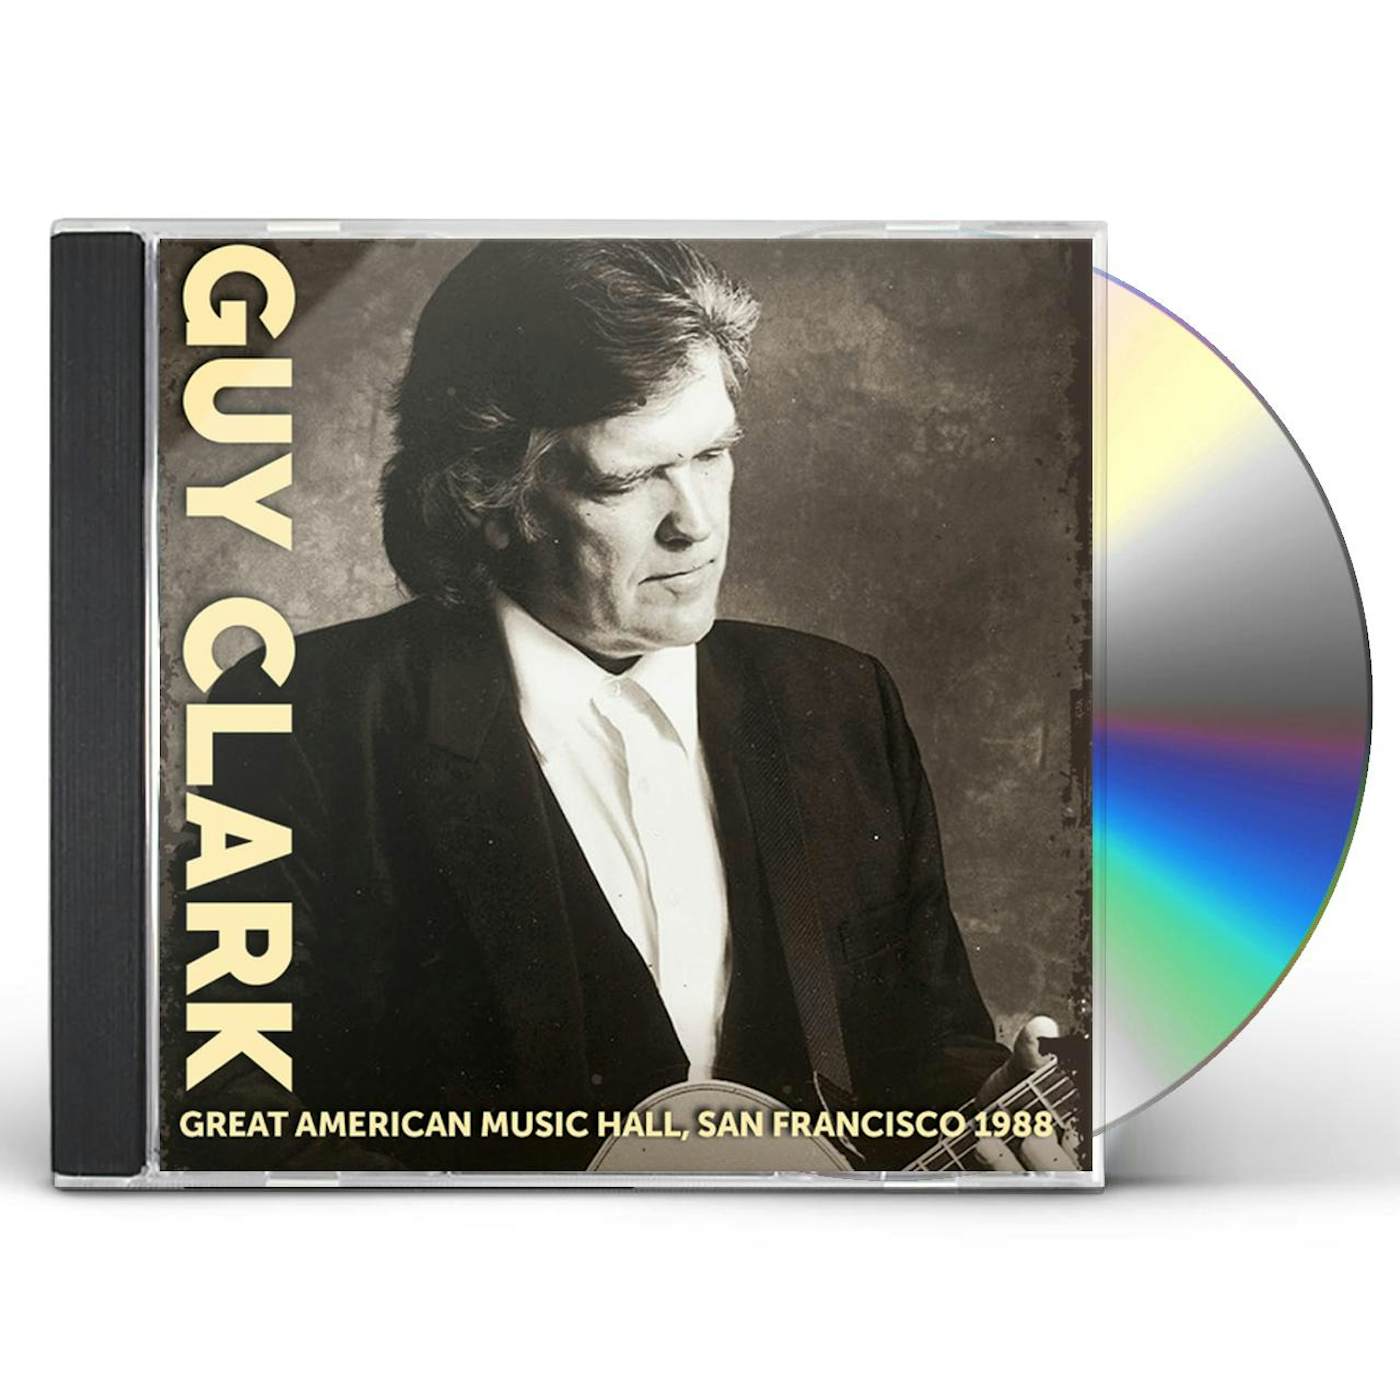 Guy Clark GREAT AMERICAN MUSIC HALL SAN FRANCISCO 1988 CD